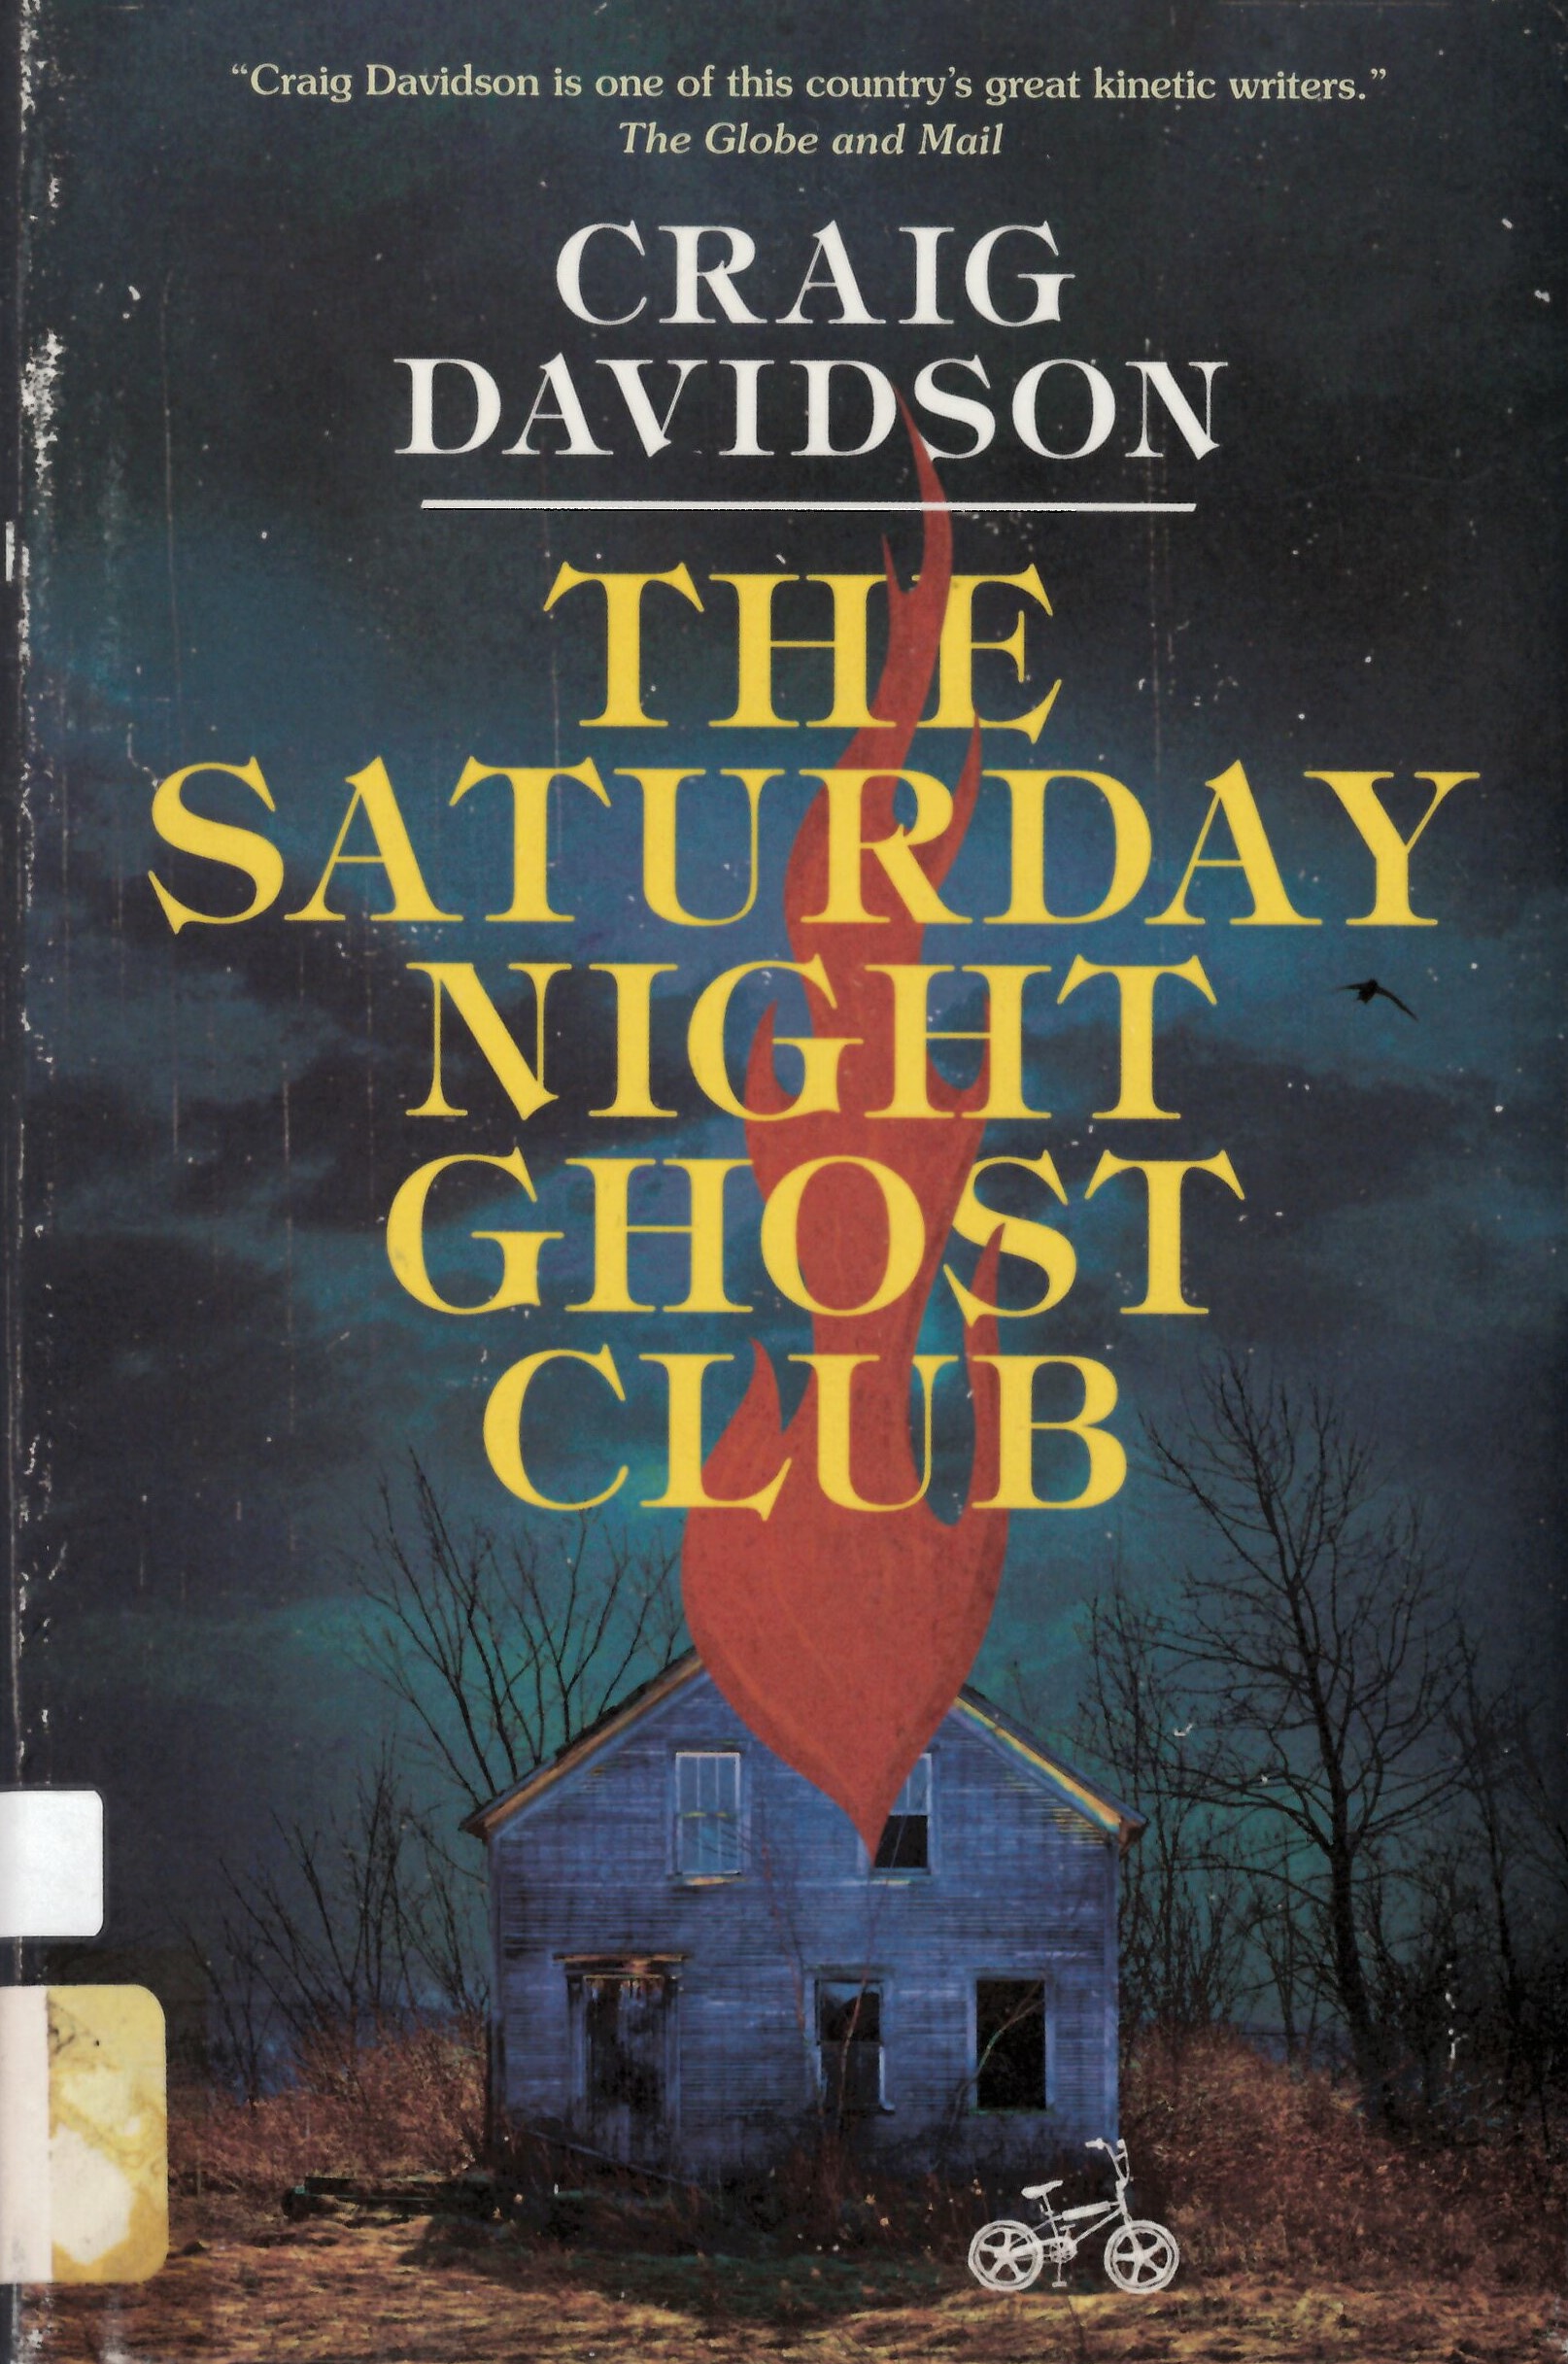 The Saturday night ghost club : a novel